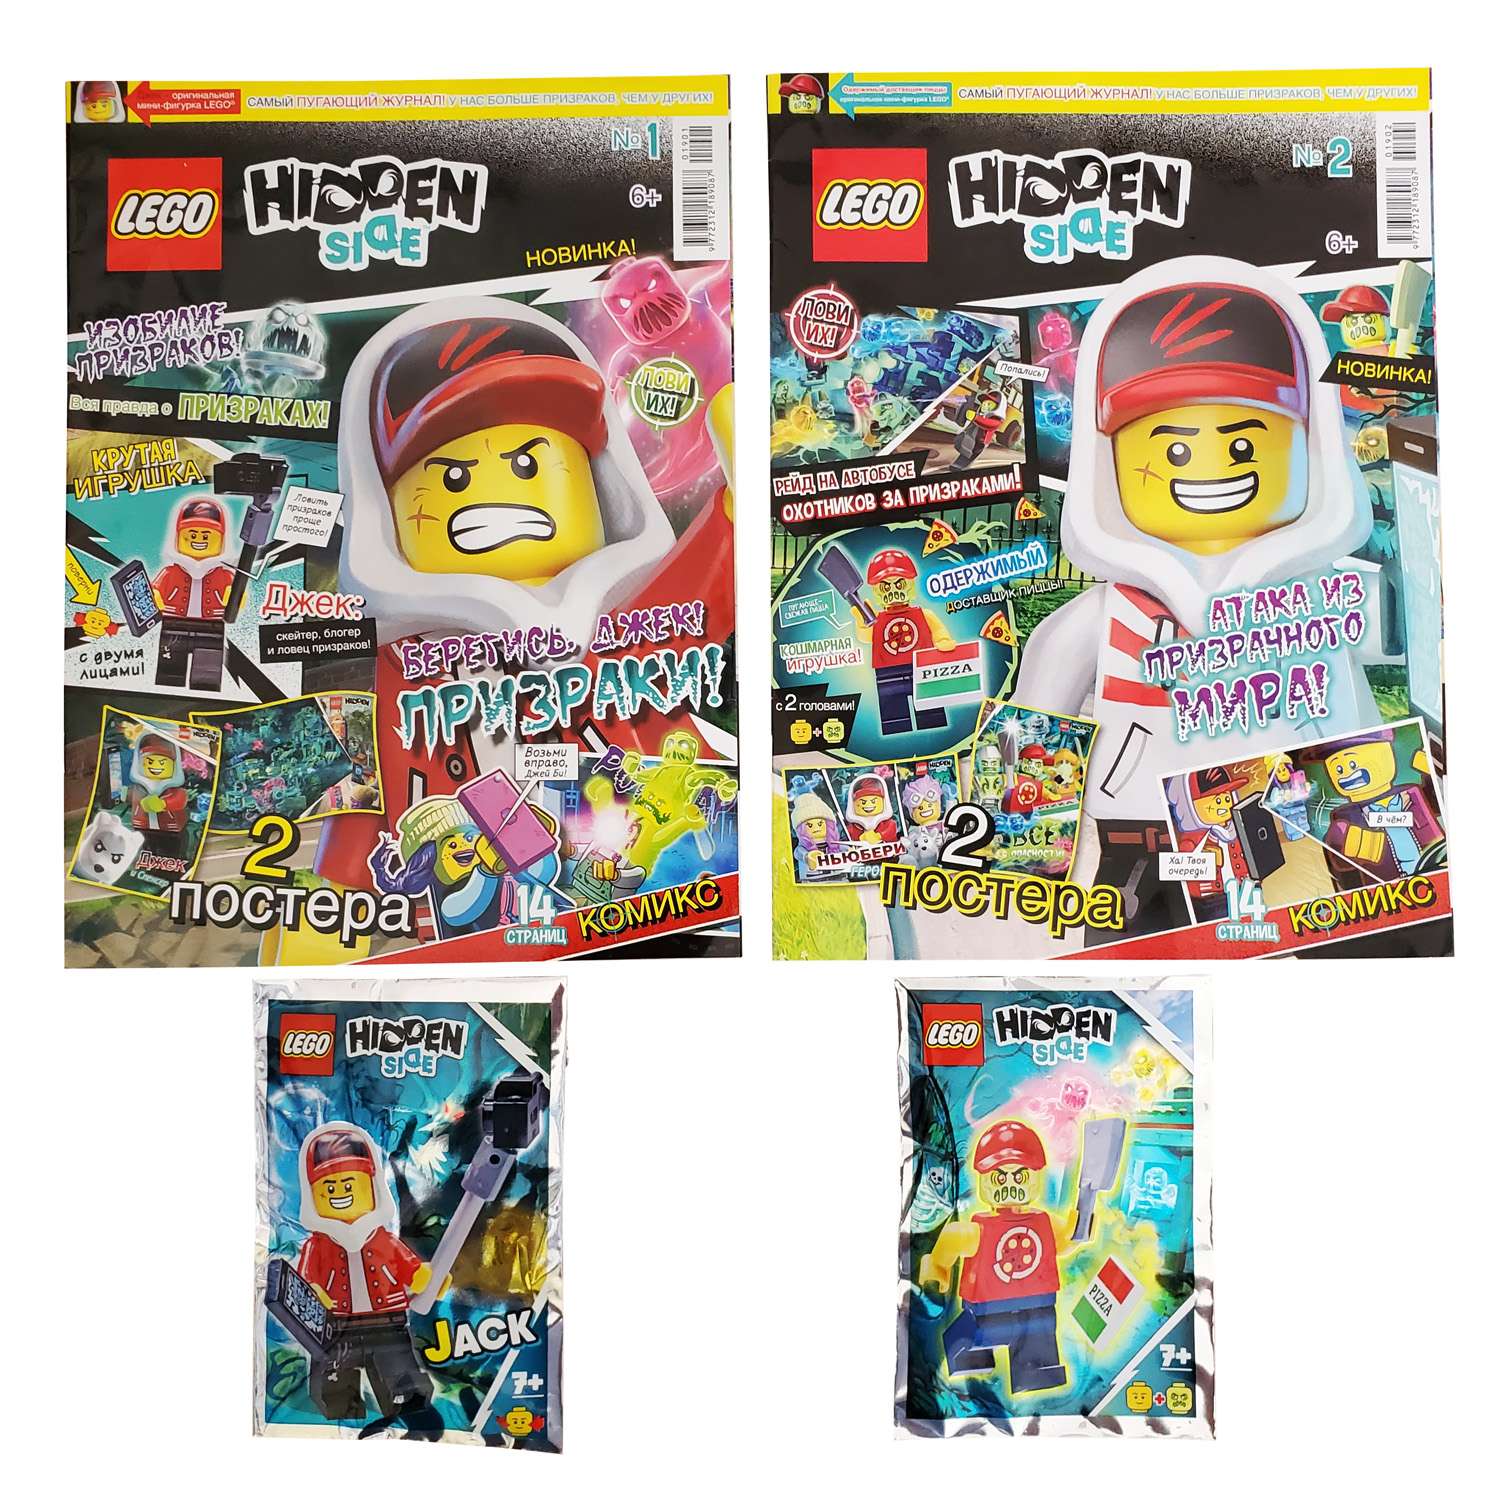 Журнал LEGO Hidden Side 2 по цене 1 - фото 1